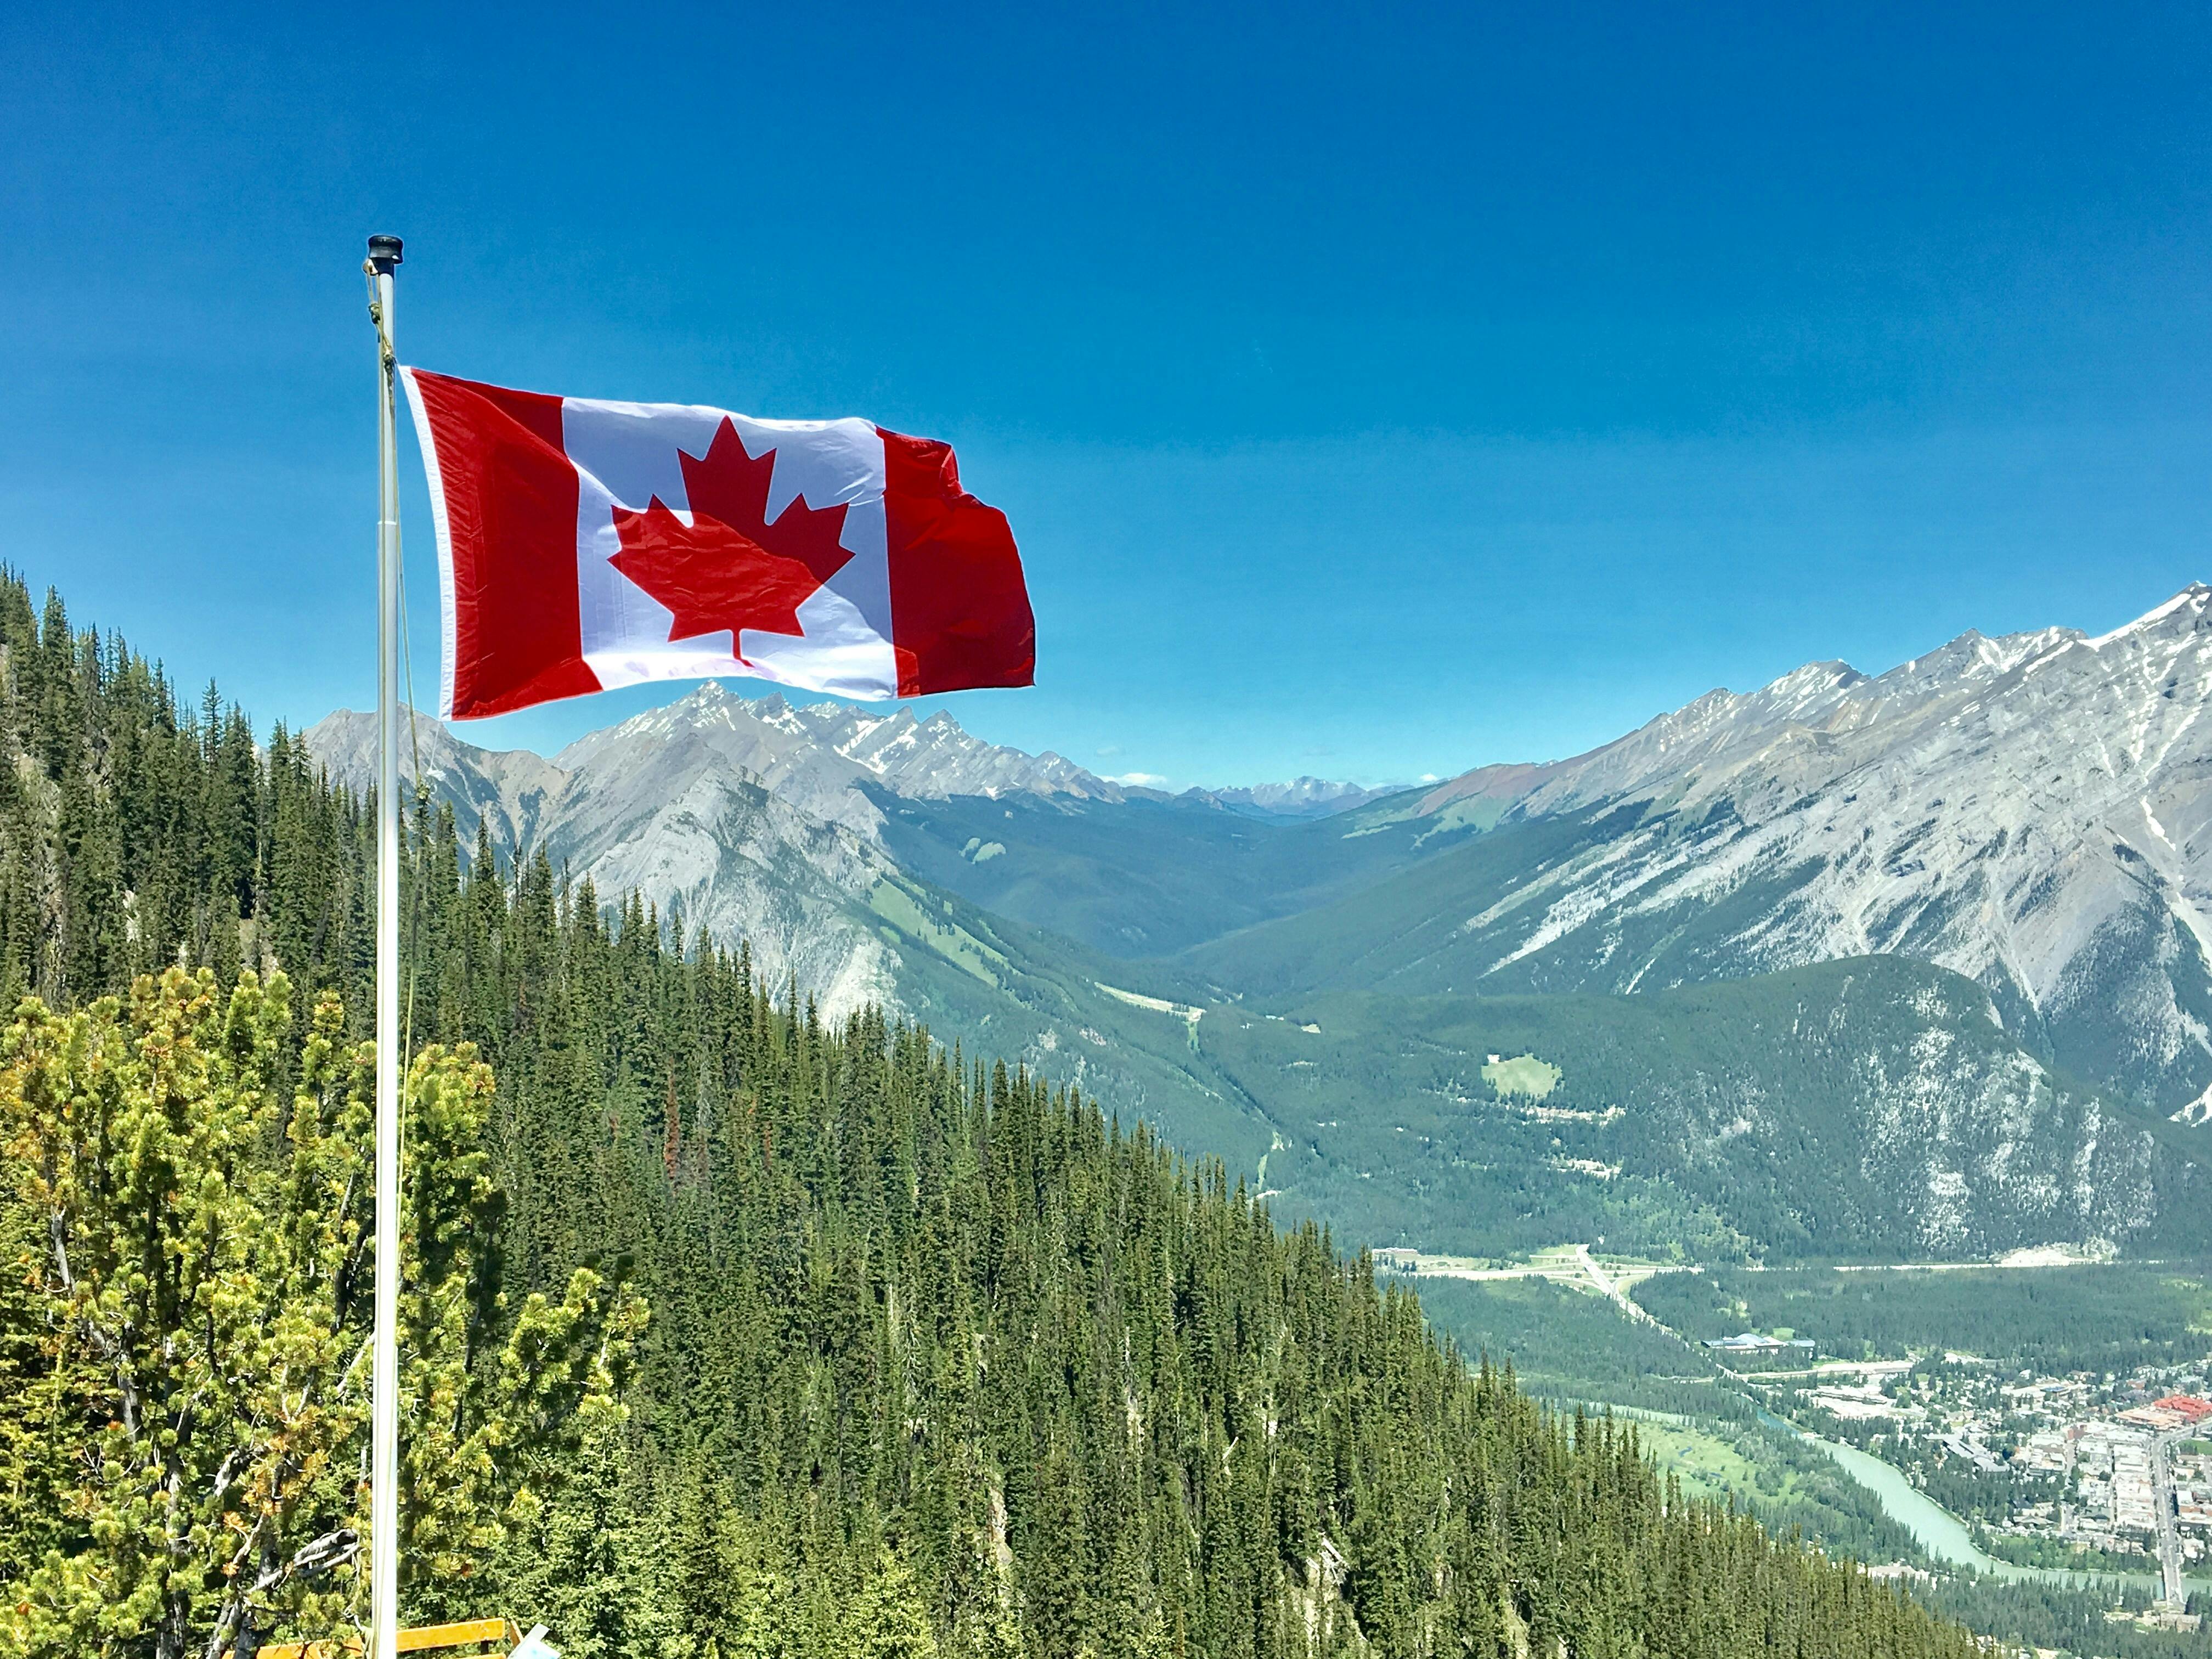 Canada Flag With Mountain Range View \u00b7 Free Stock Photo